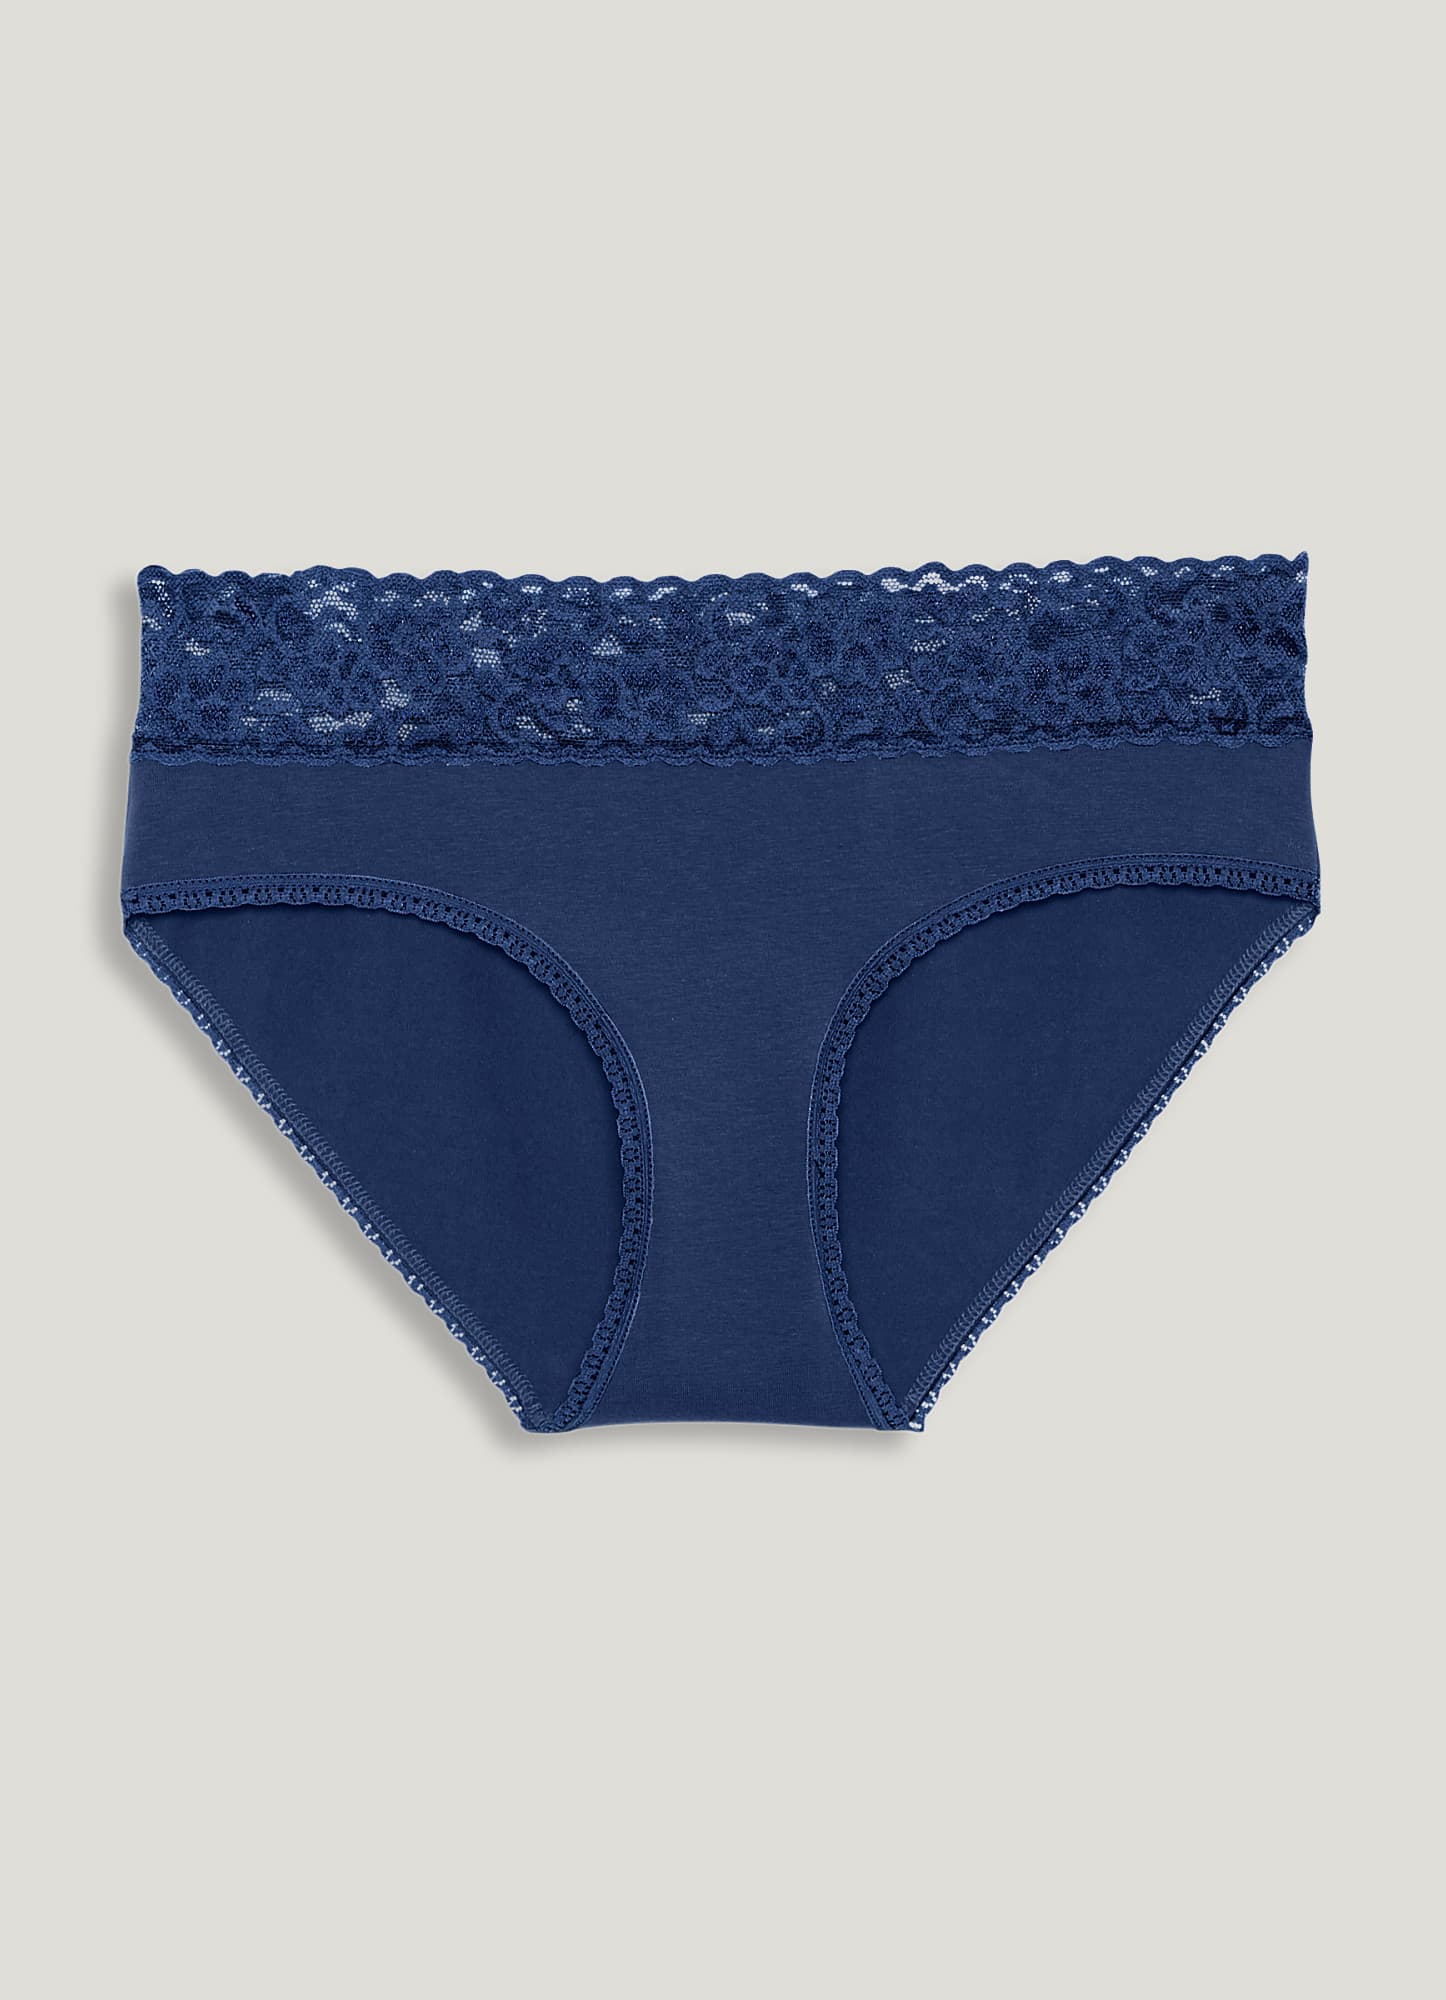 CHUNG Women's Cotton Briefs Underwear Super Sexy Wide Lace Edge